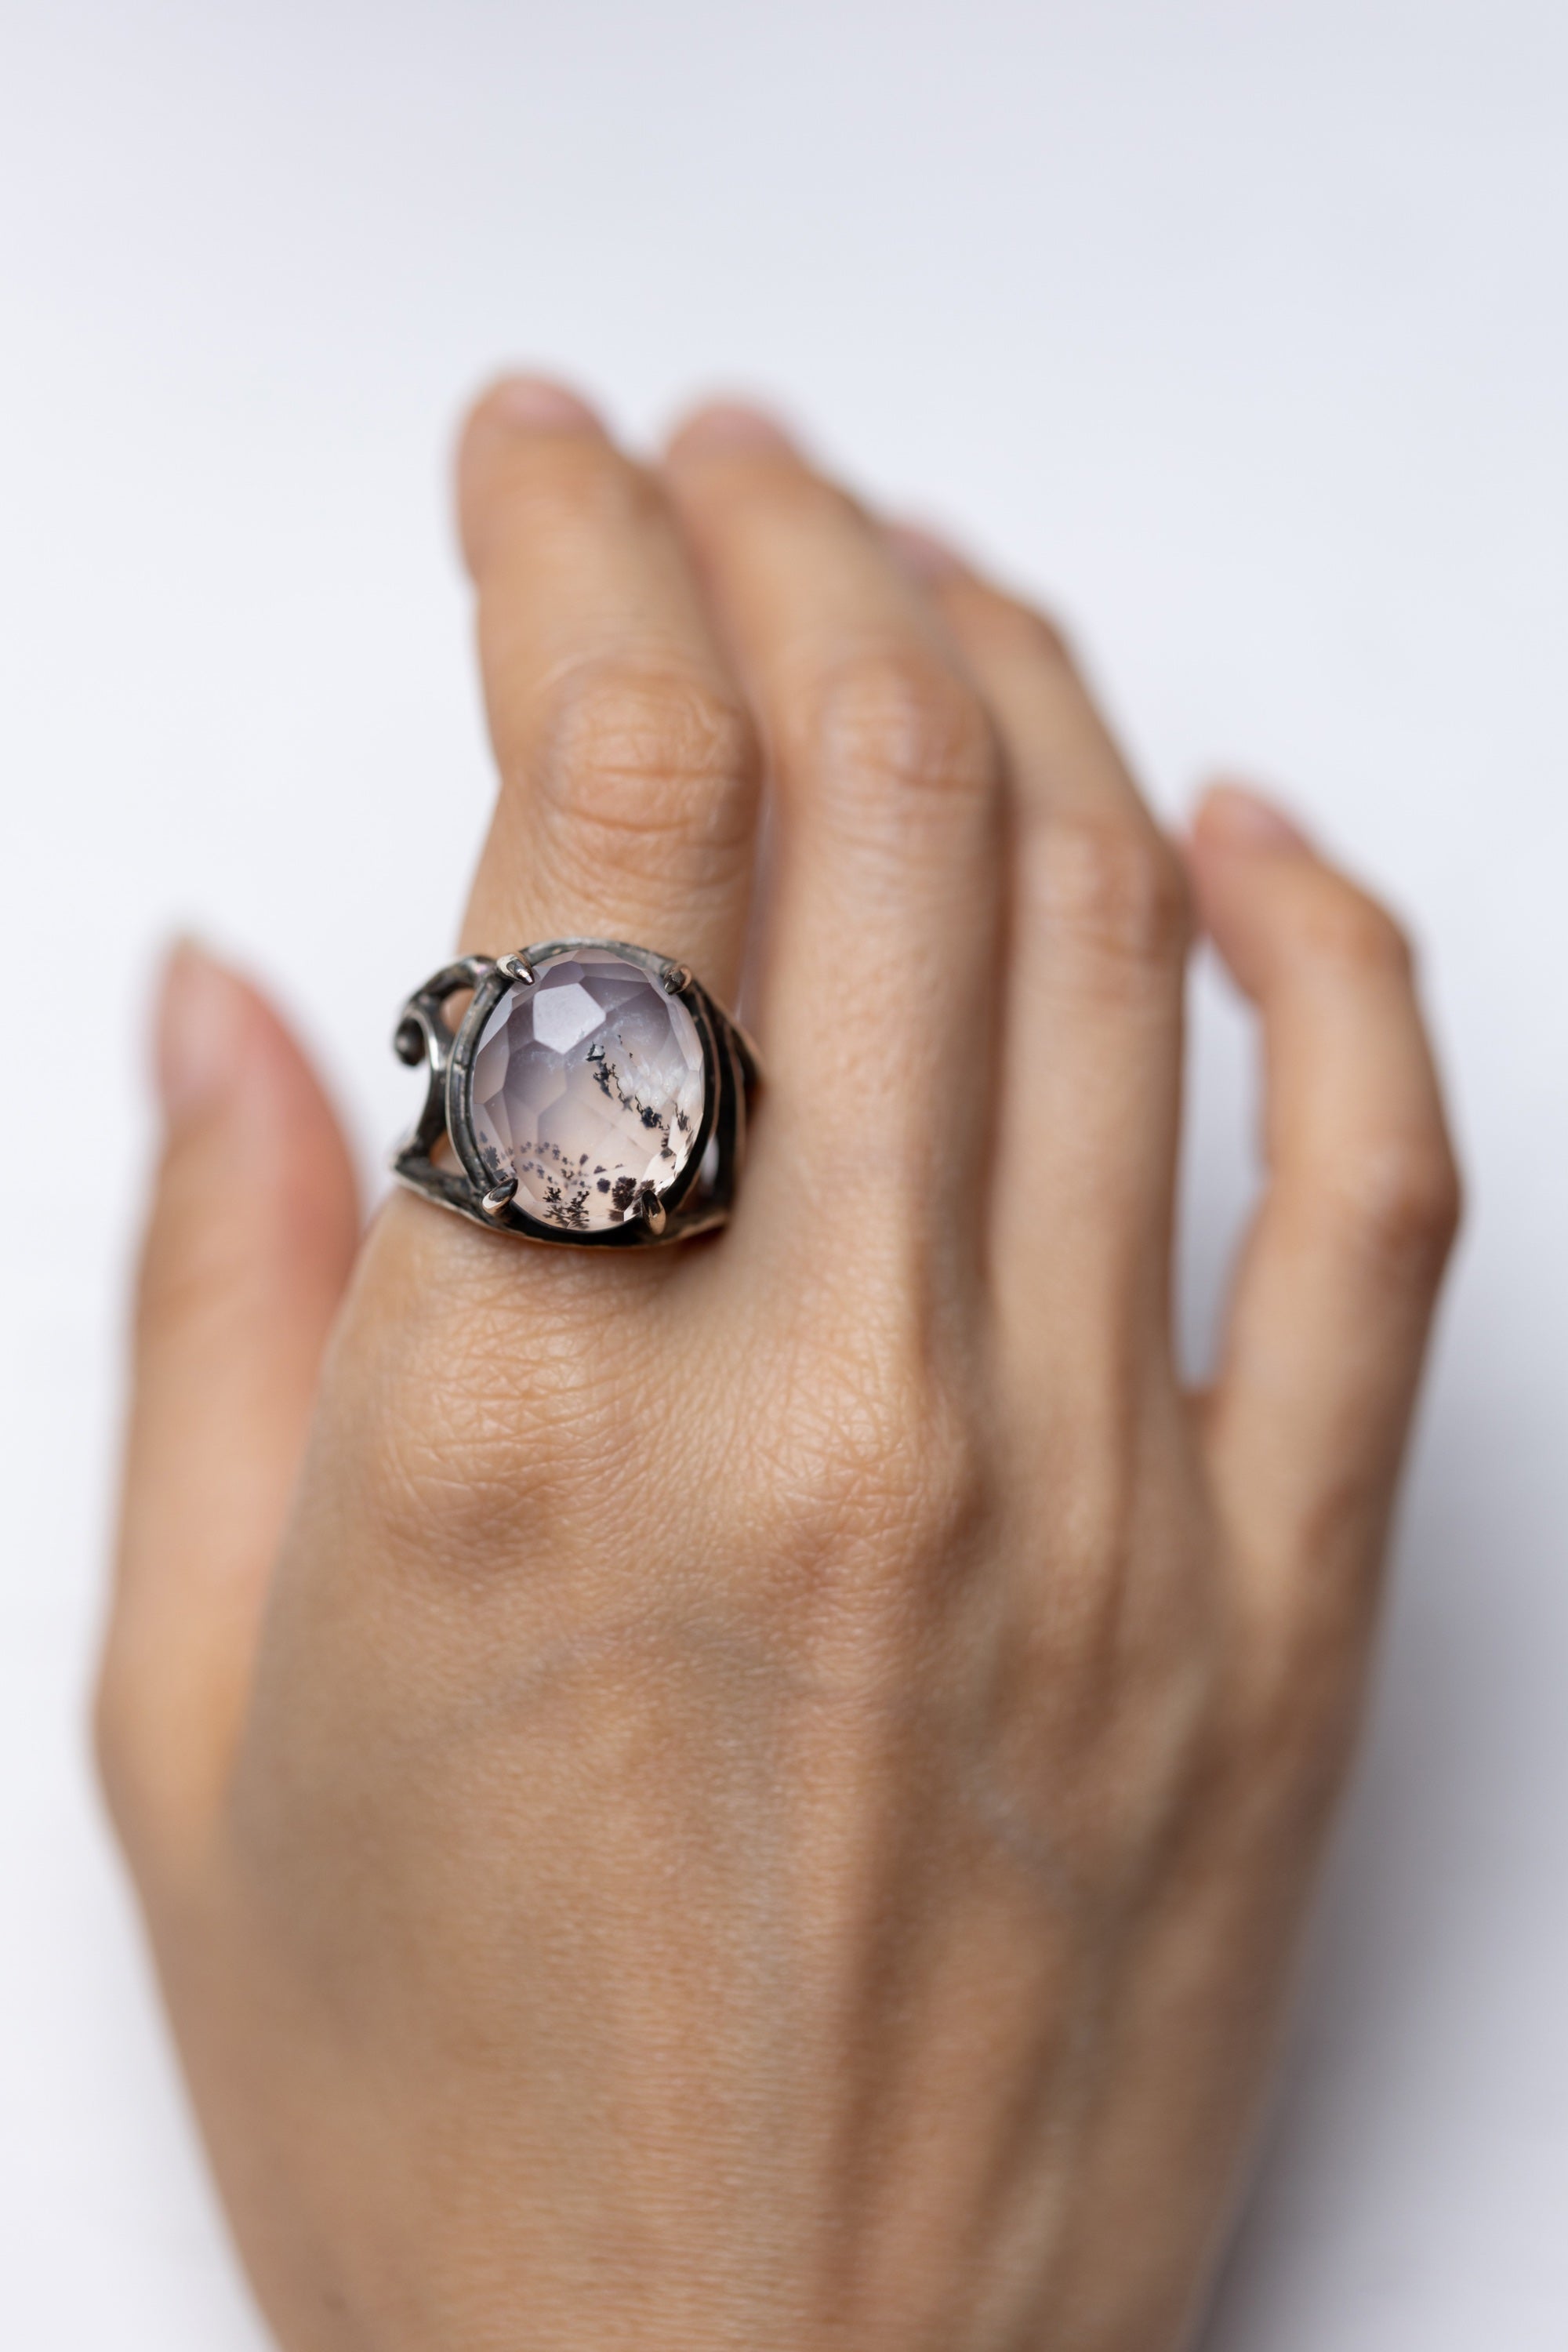 Winter Wonderland Silver Dendritic Agate Ring